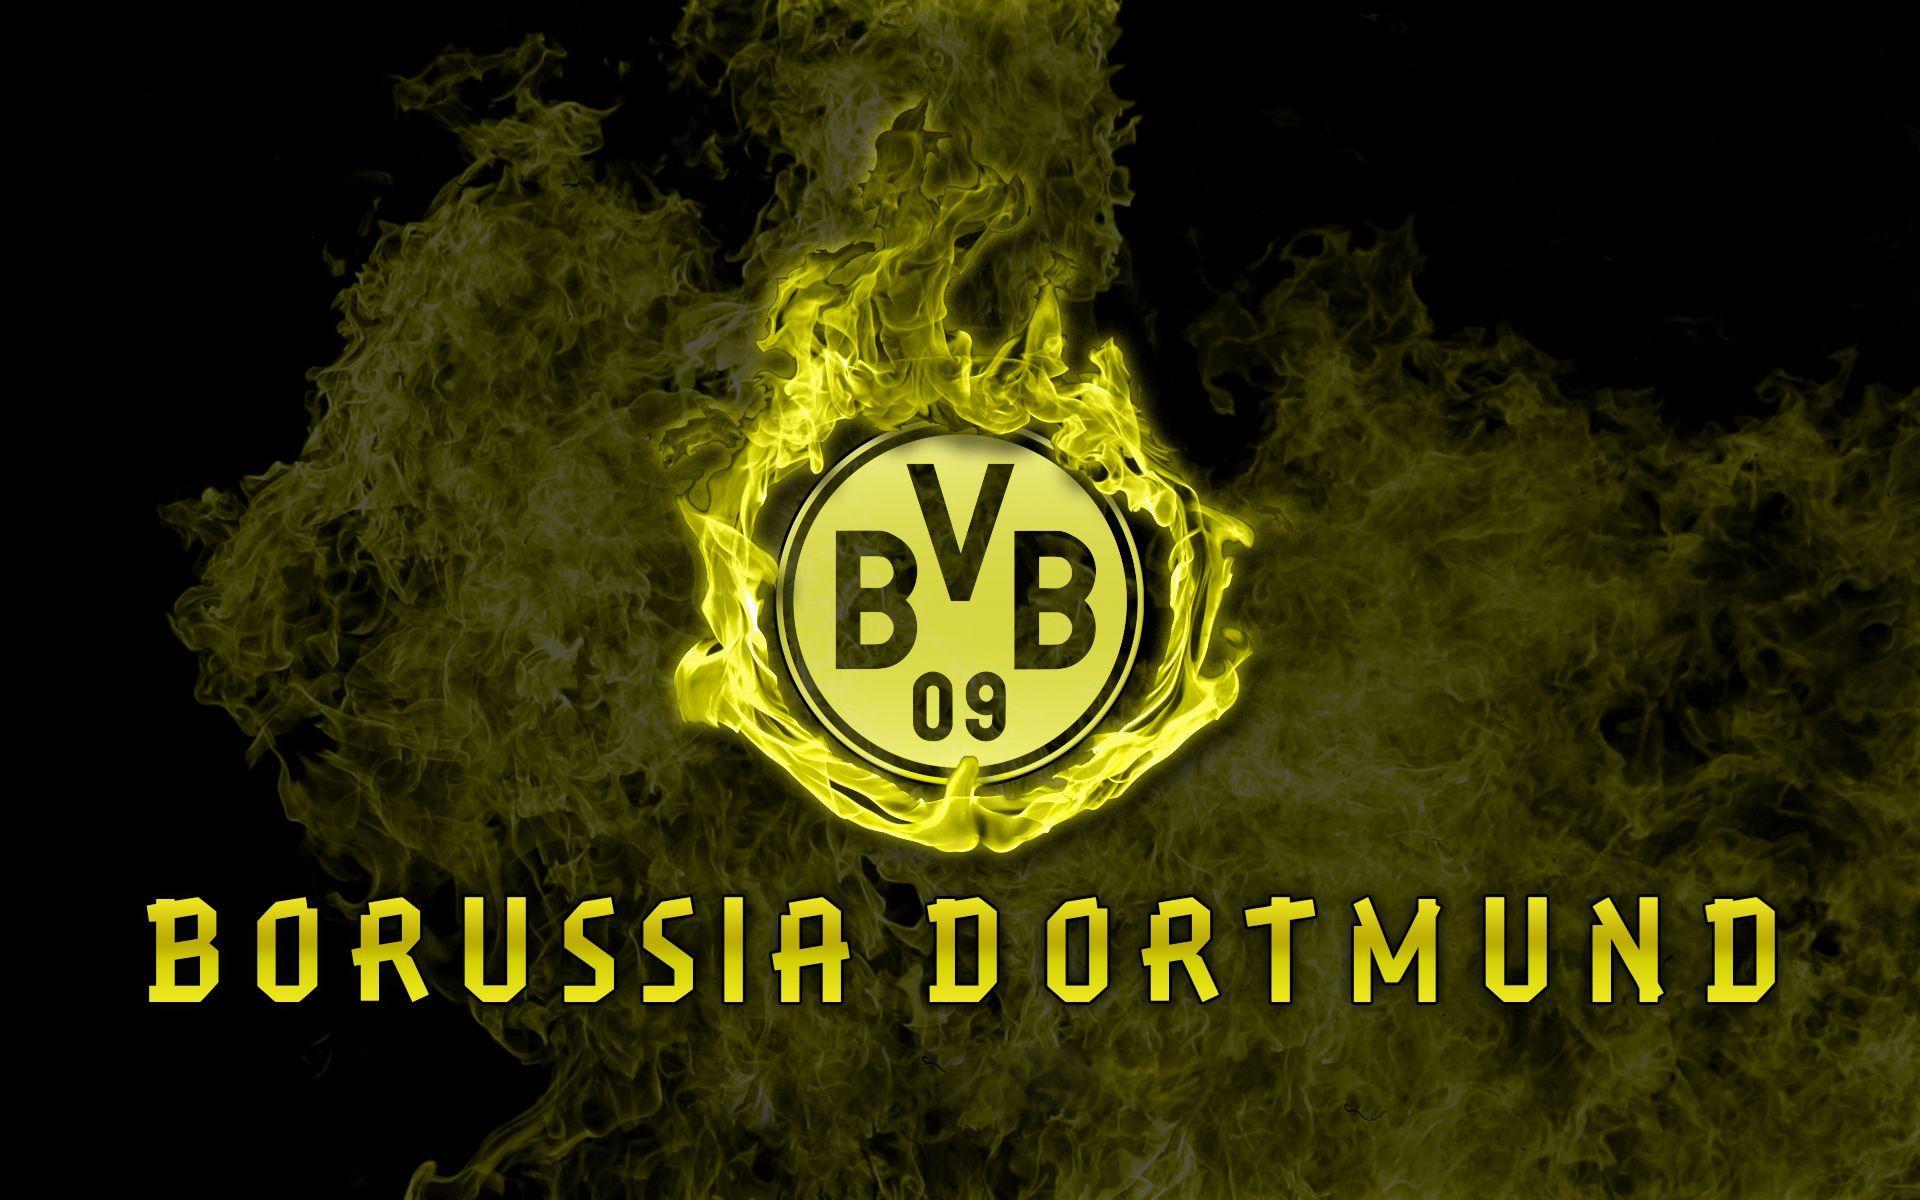 99 Borussia Dortmund Wallpapers On Wallpapersafari